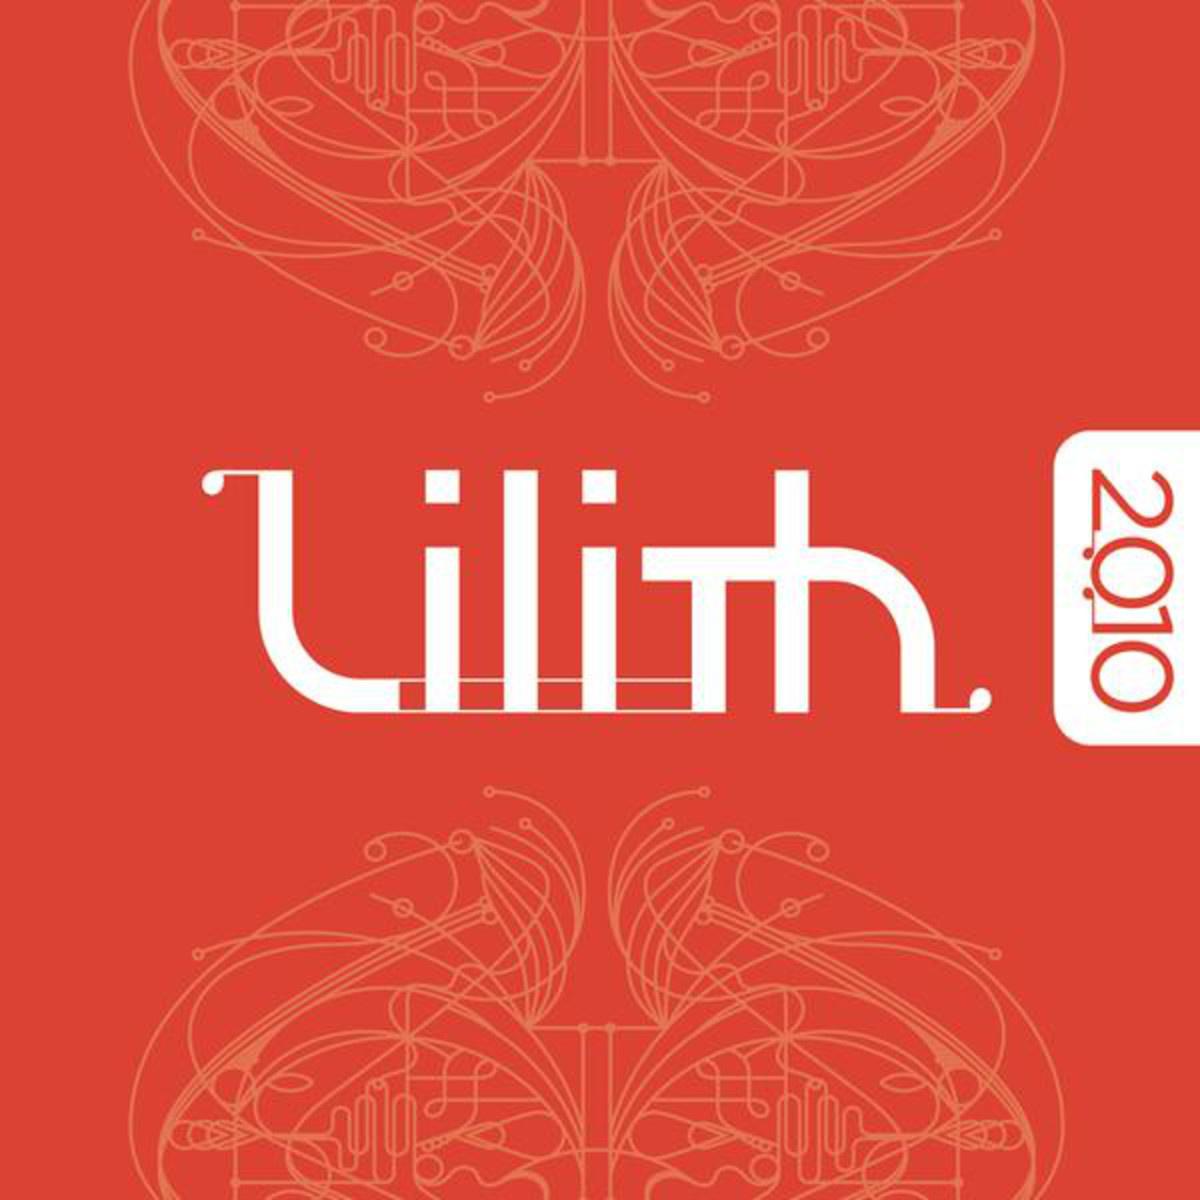 Lilith 2010专辑